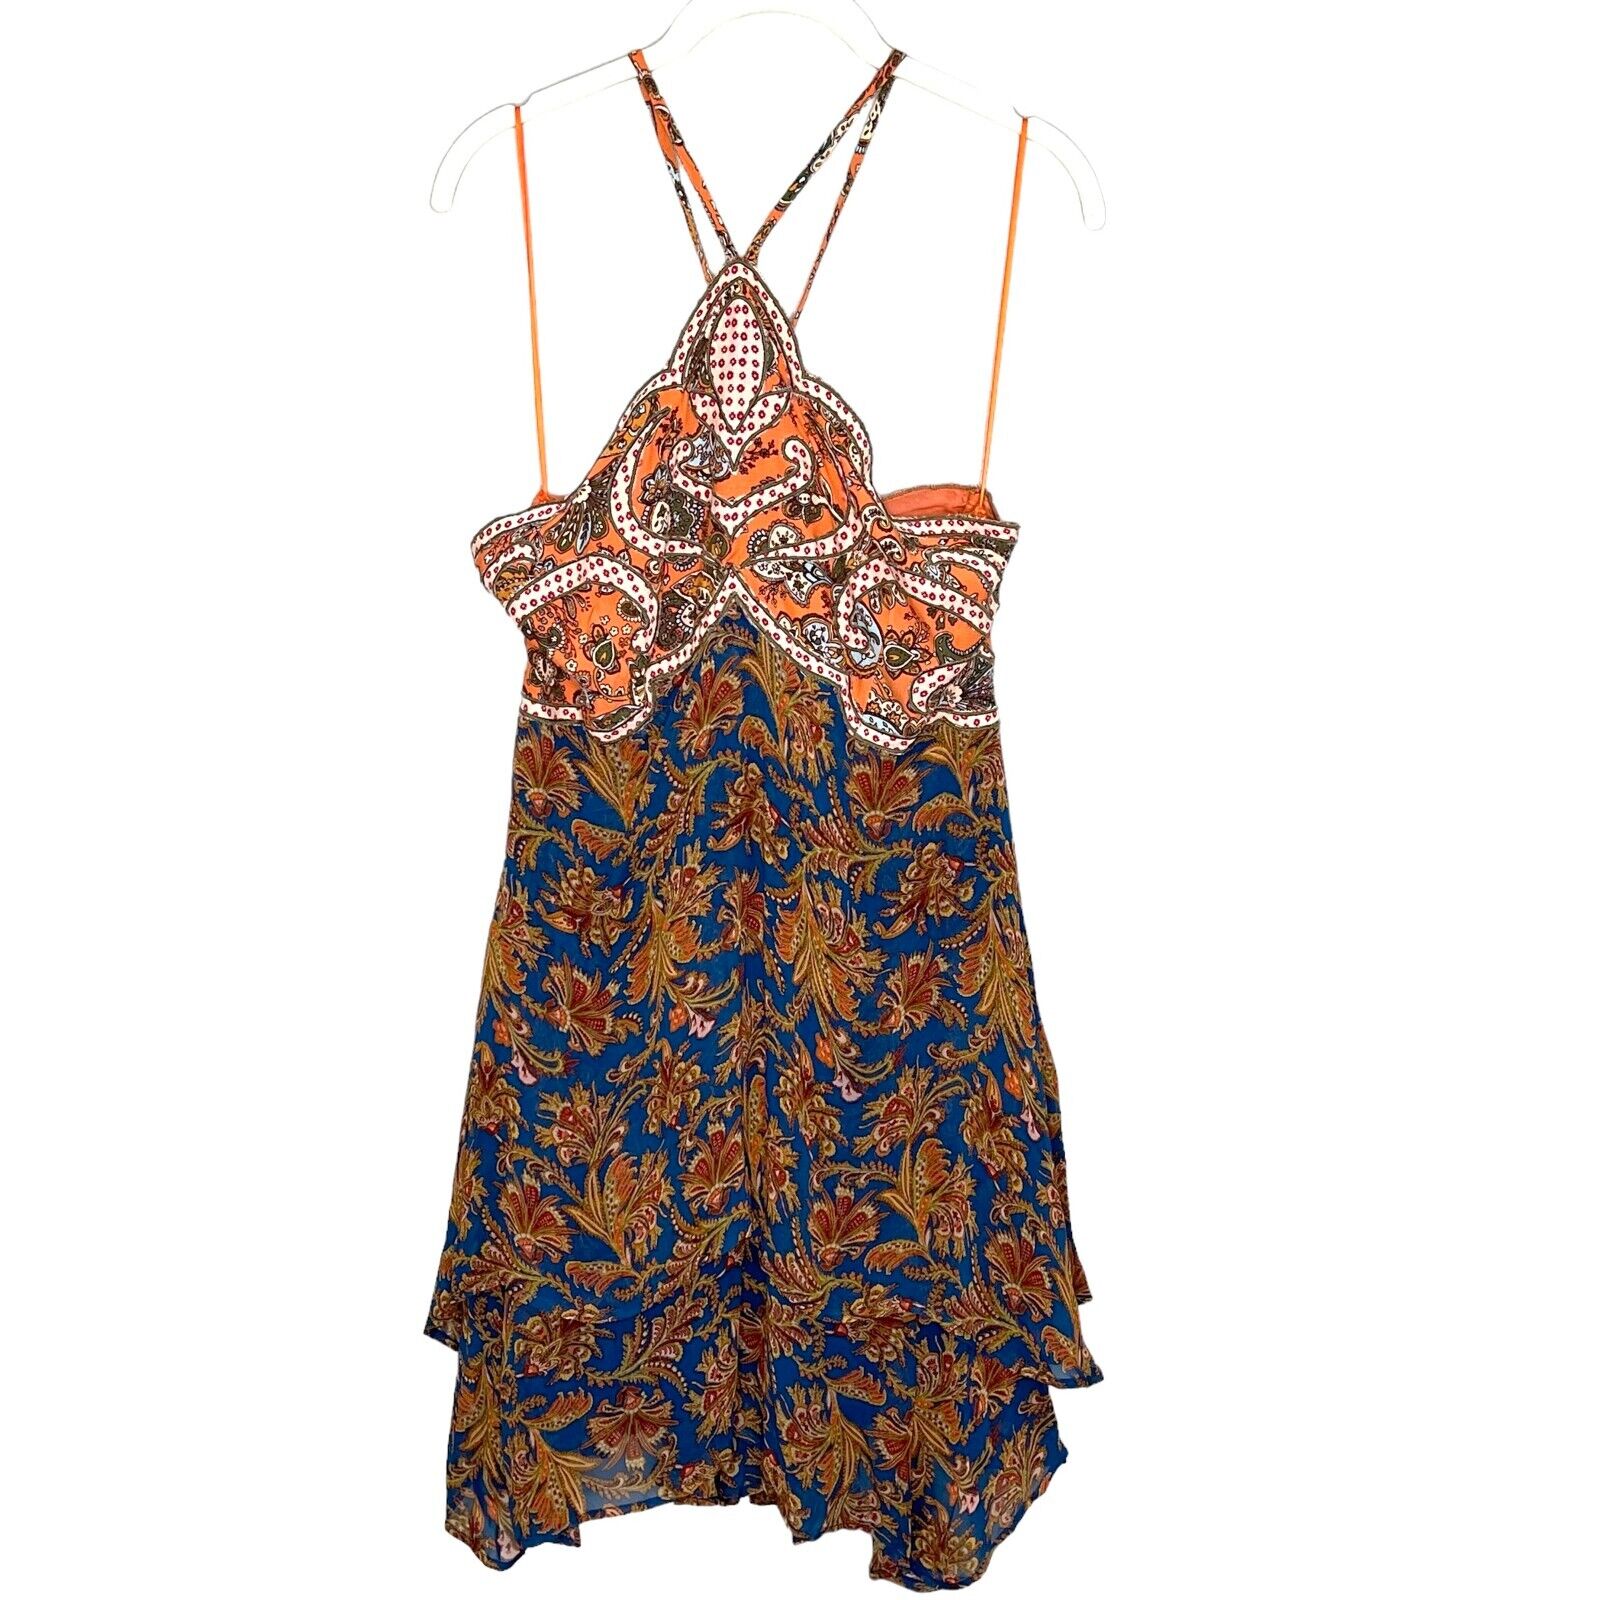 Anthropologie Halter Applique Mini Dress Size 8 NEW $190